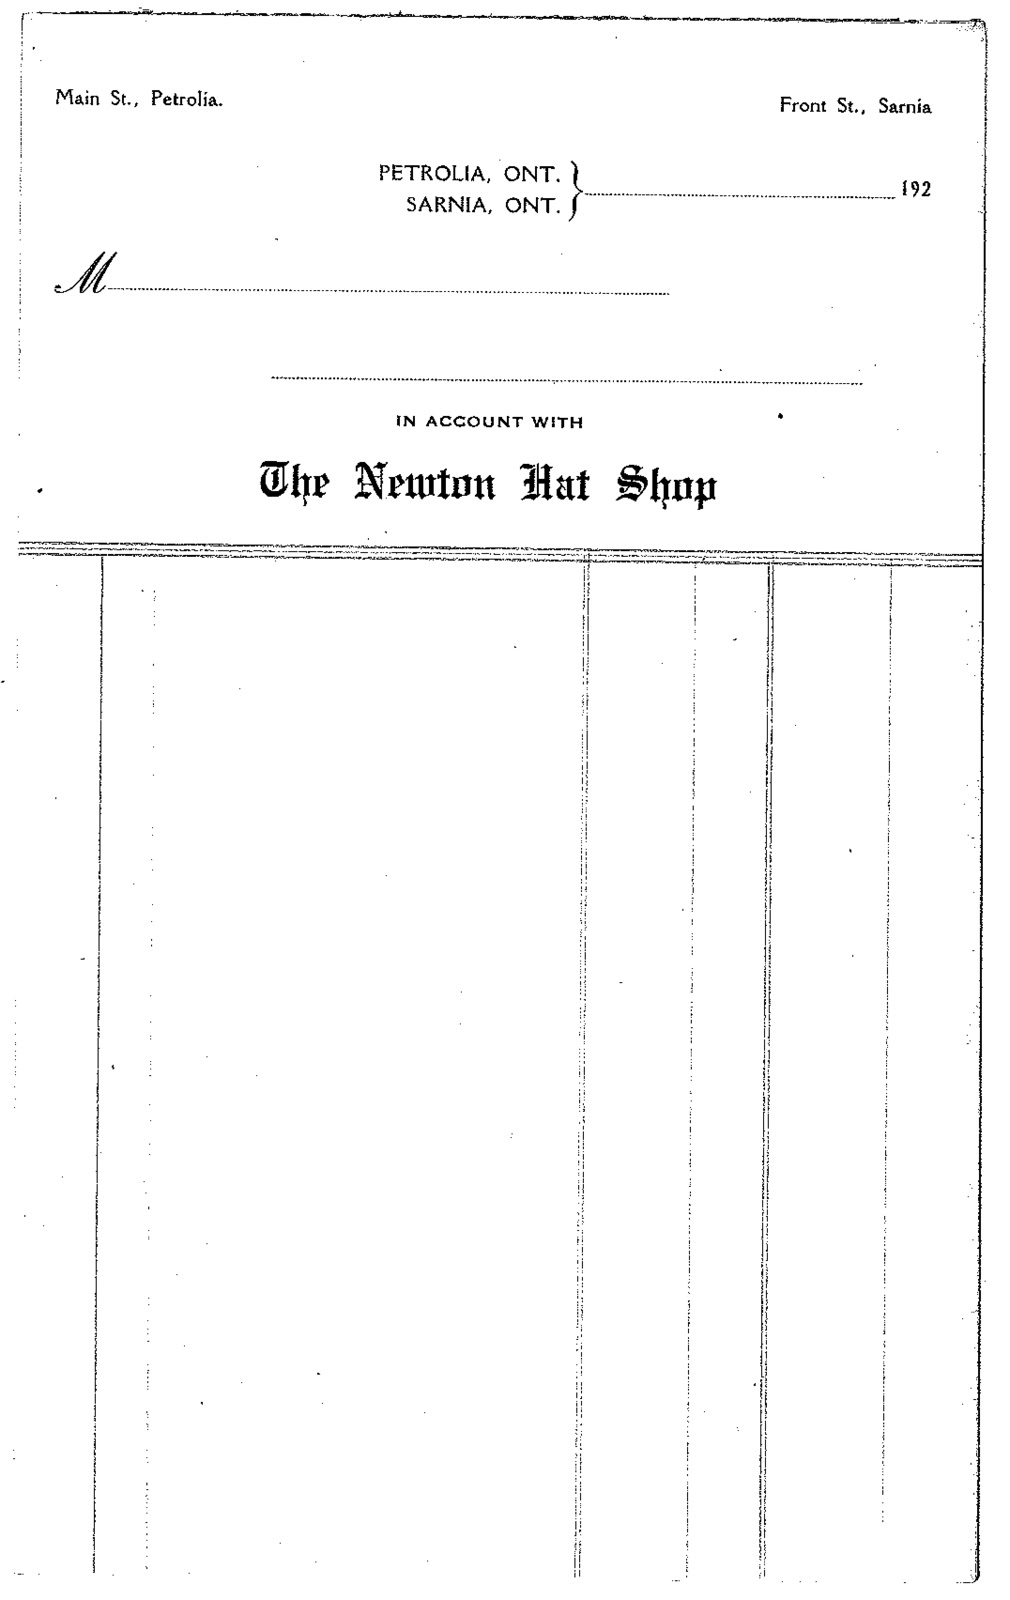 A copy of the Petrolia Hat Shop invoice.